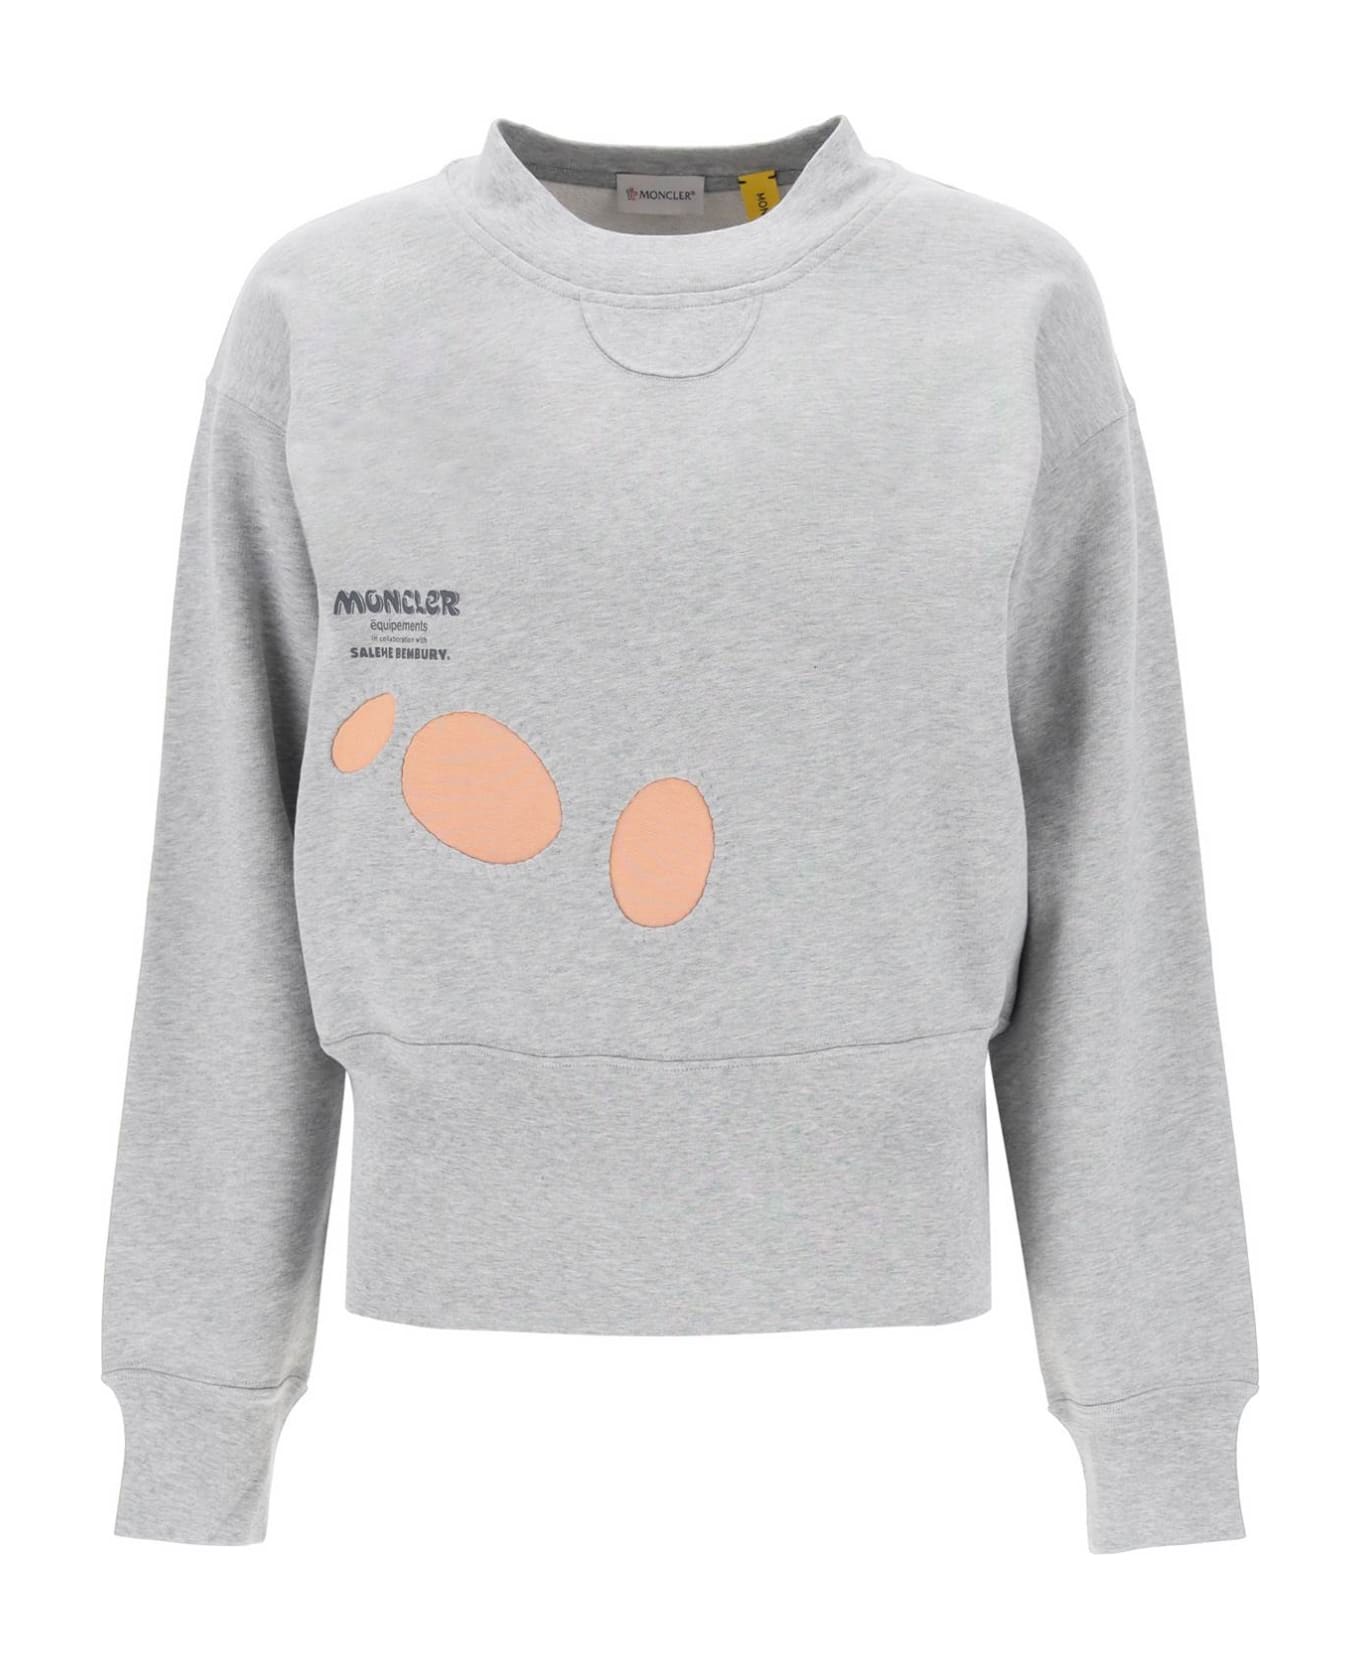 Moncler Genius X Salehe Bembury Sweatshirt - Grey